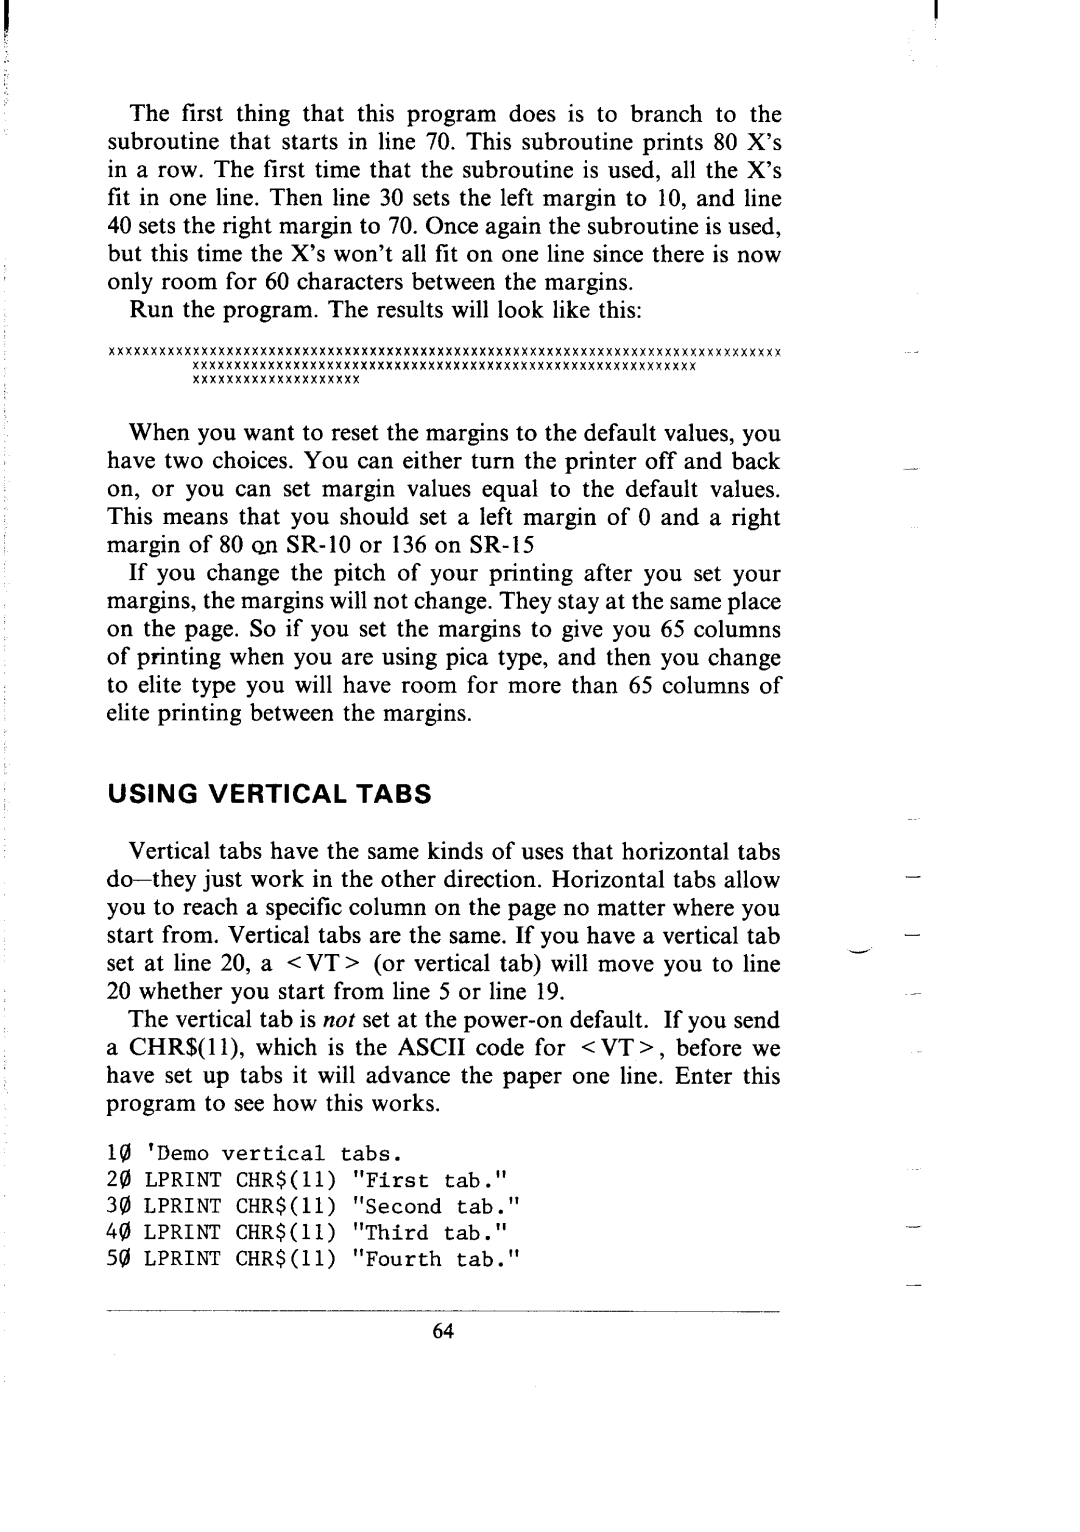 Star Micronics SR-10/I5 user manual Using Vertical Tabs 